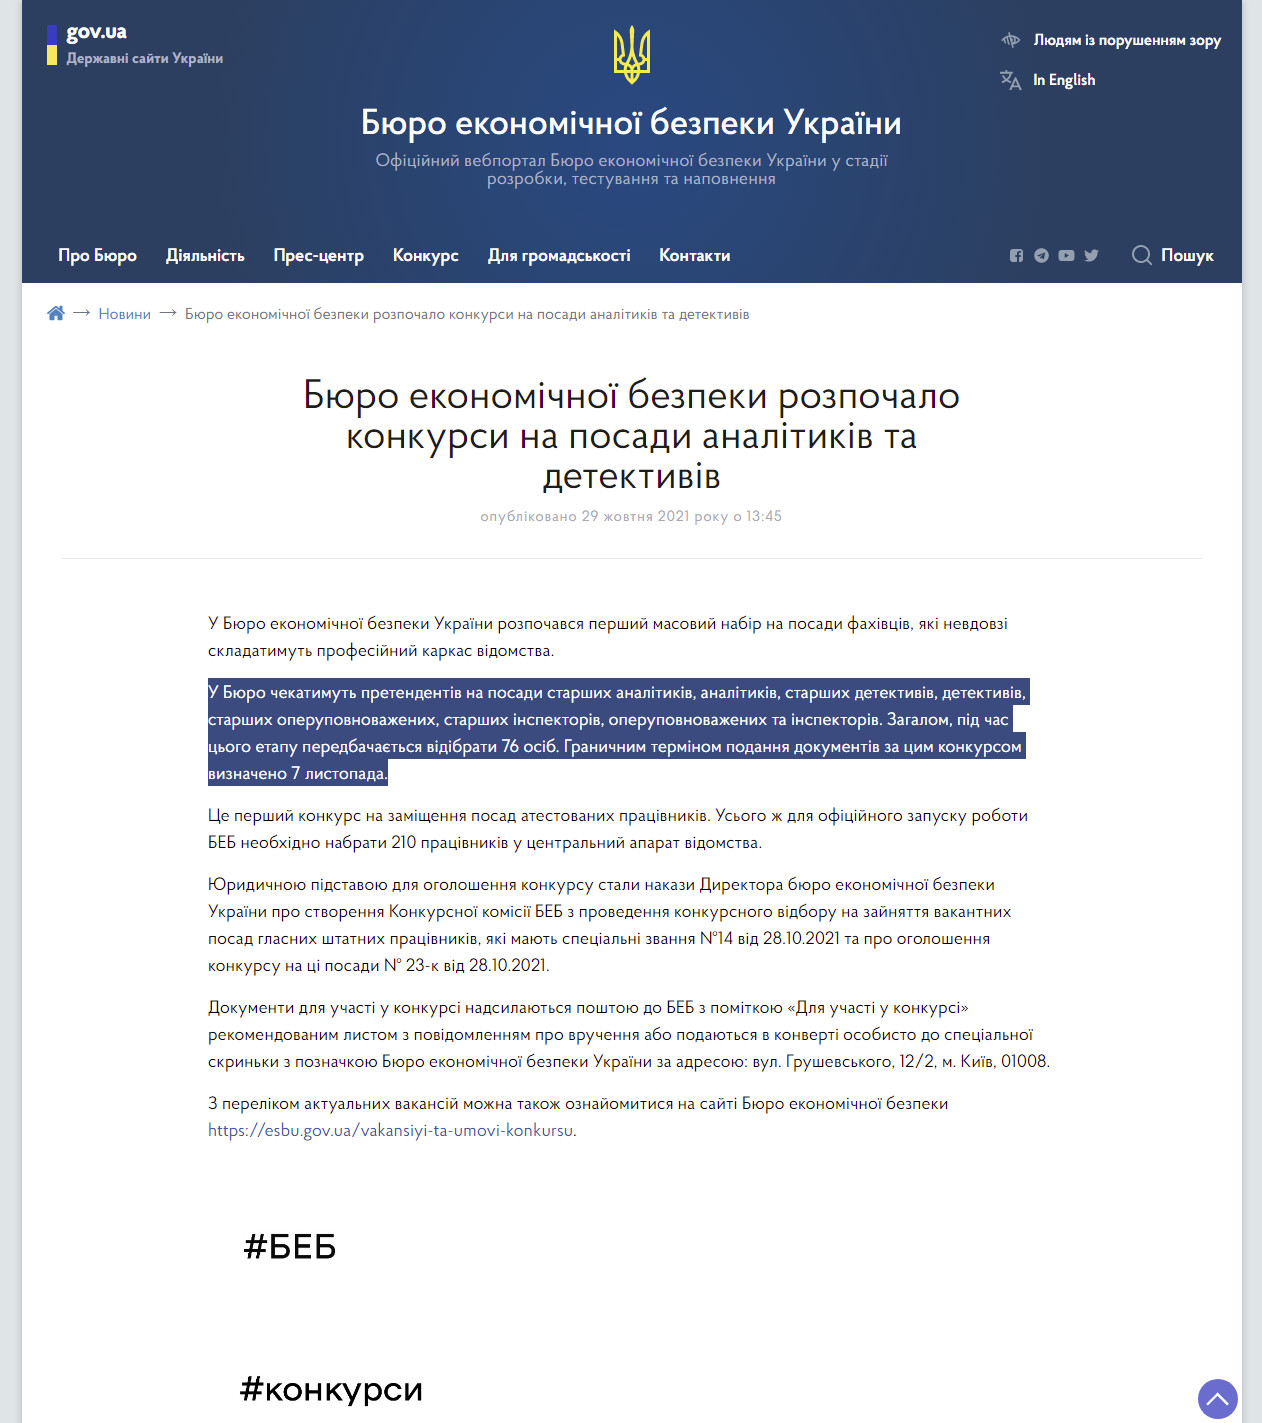 https://esbu.gov.ua/news/byuro-ekonomichnoyi-bezpeki-rozpochalo-konkursi-na-posadi-analitikiv-ta-detektiviv